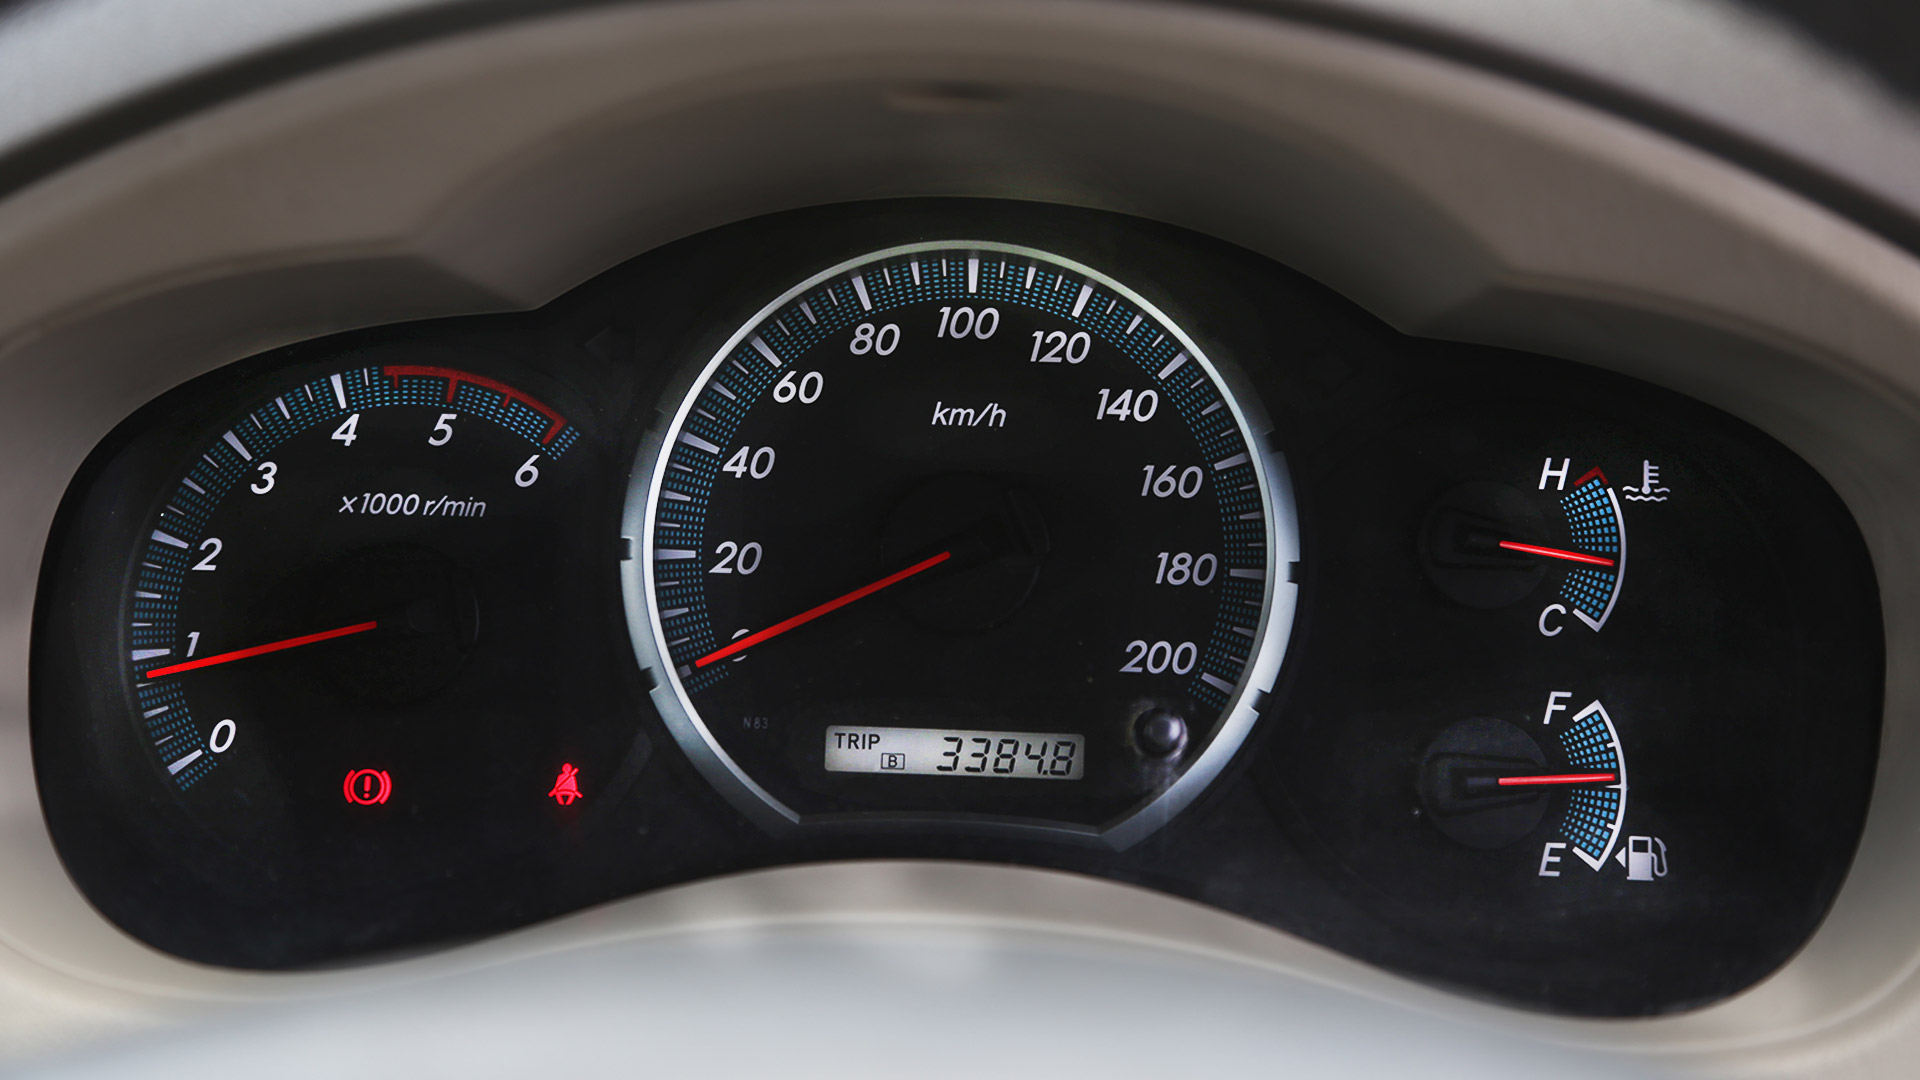 Toyota Innova 2015 2.5G 7 Seater Interior